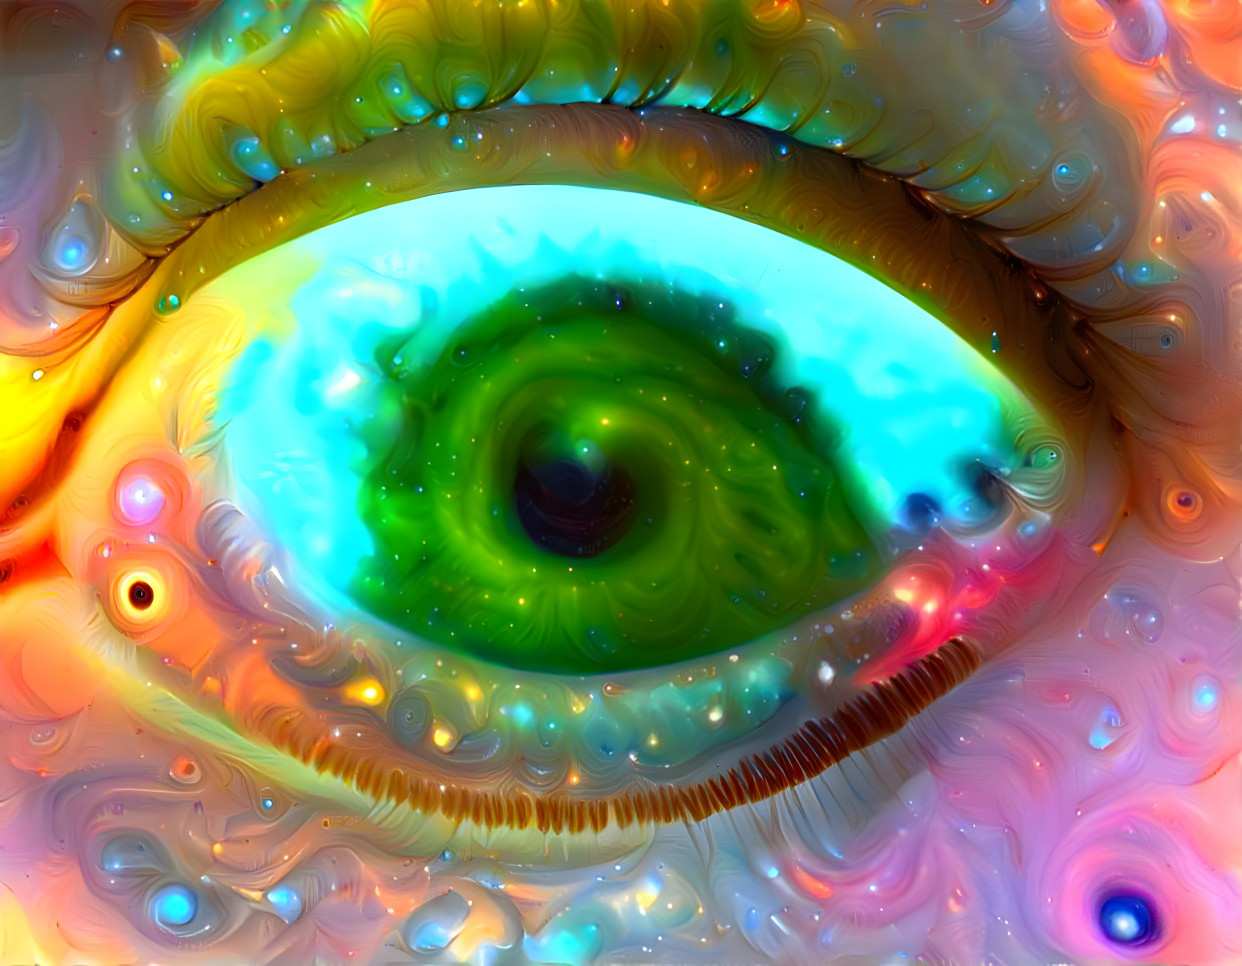 Eye of anara